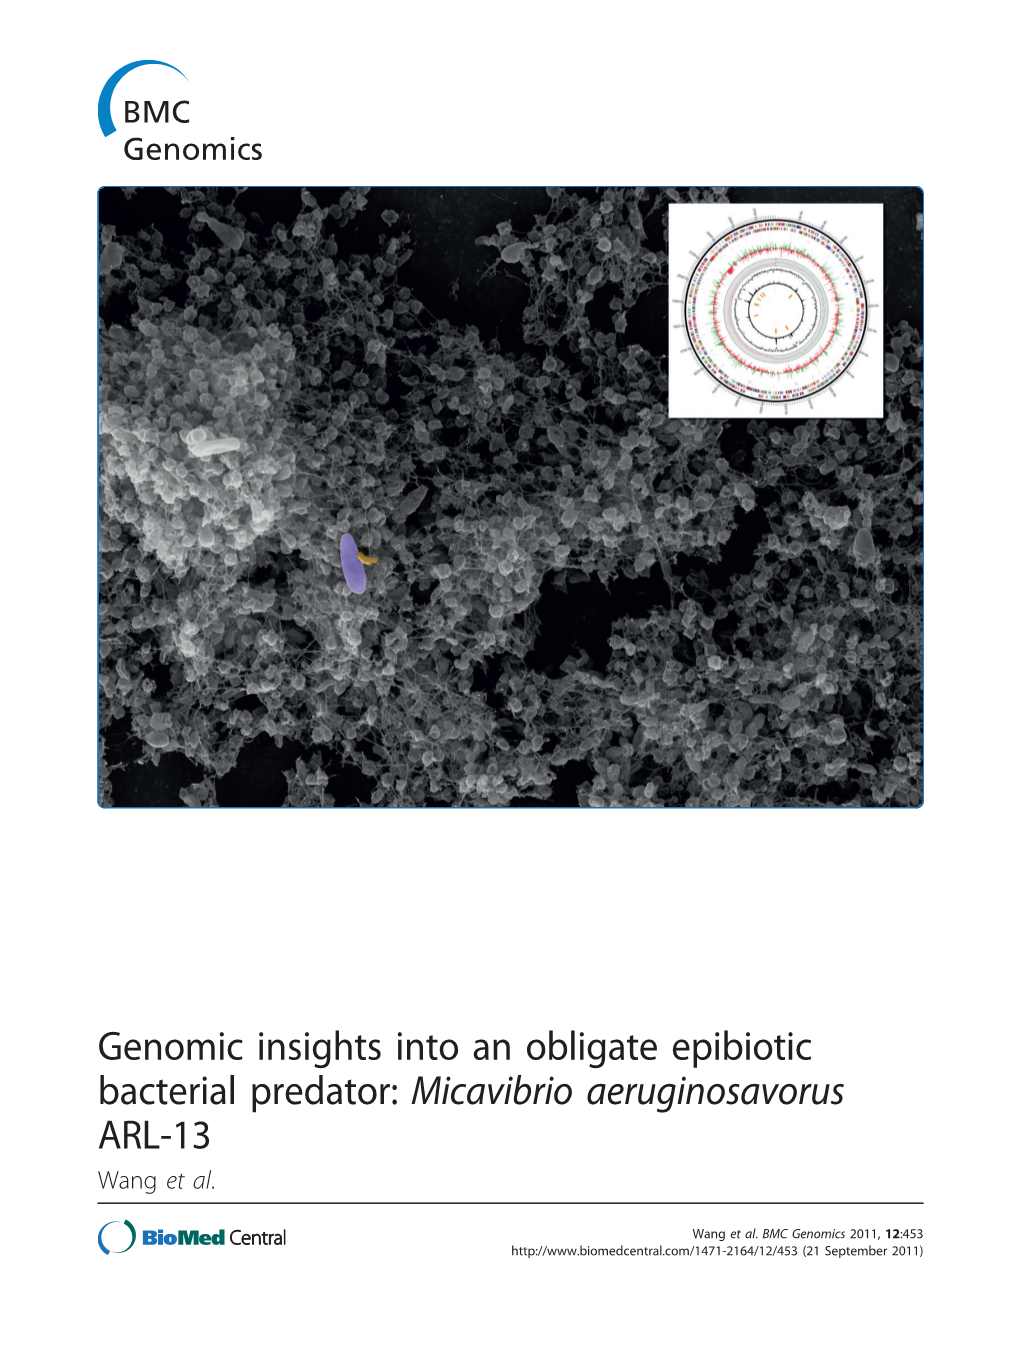 Genomic Insights Into an Obligate Epibiotic Bacterial Predator: Micavibrio Aeruginosavorus ARL-13 Wang Et Al